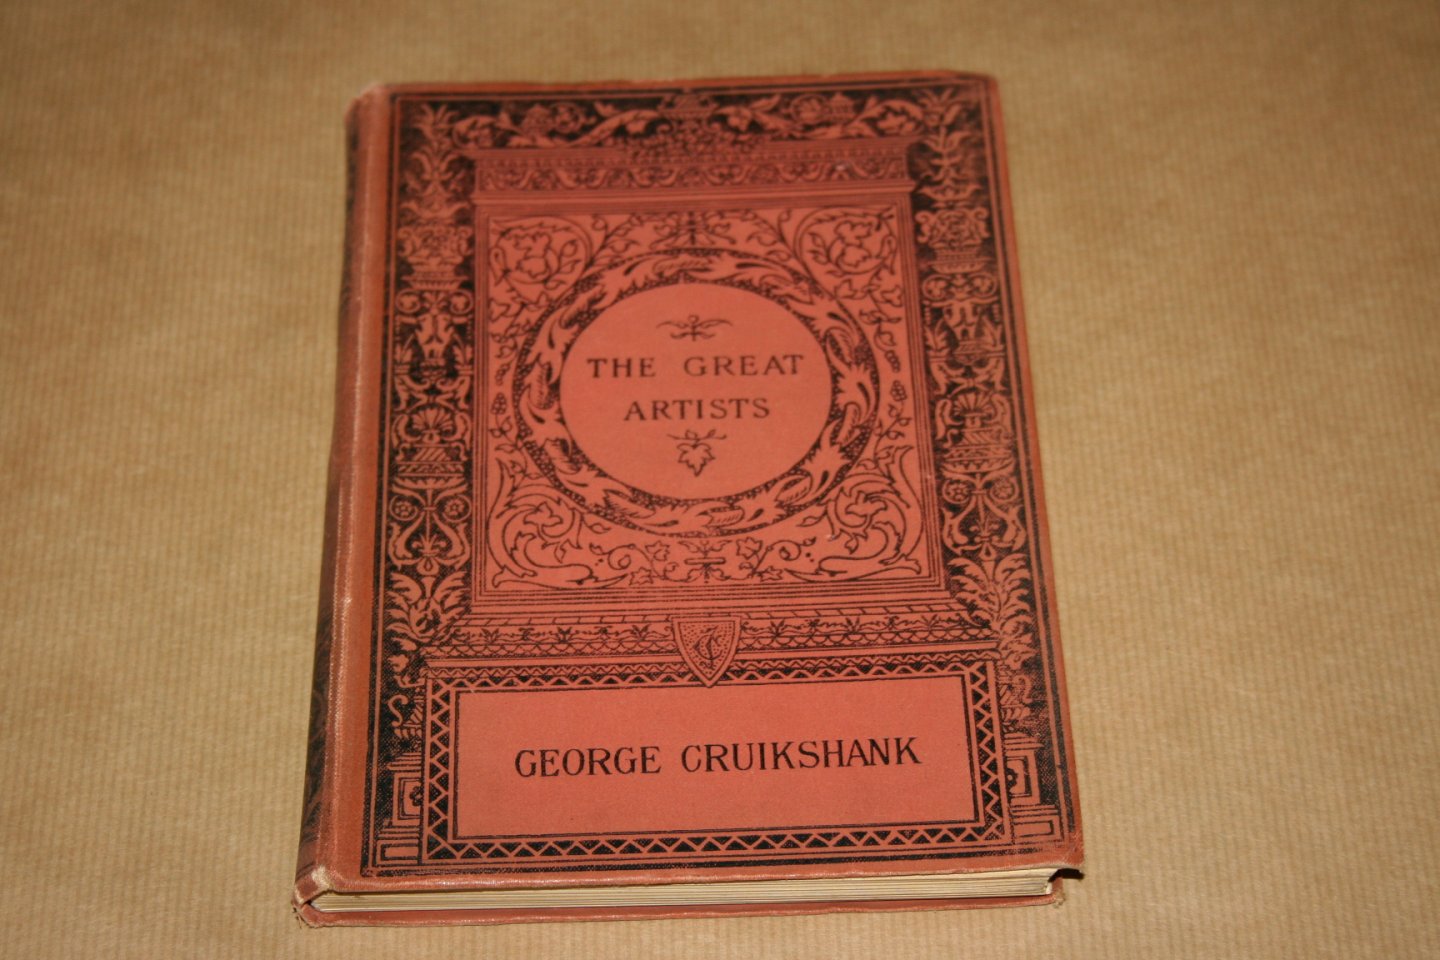 F.G. Stehpens & William Makepeace Thackeray - A memoir of George Cruikshank